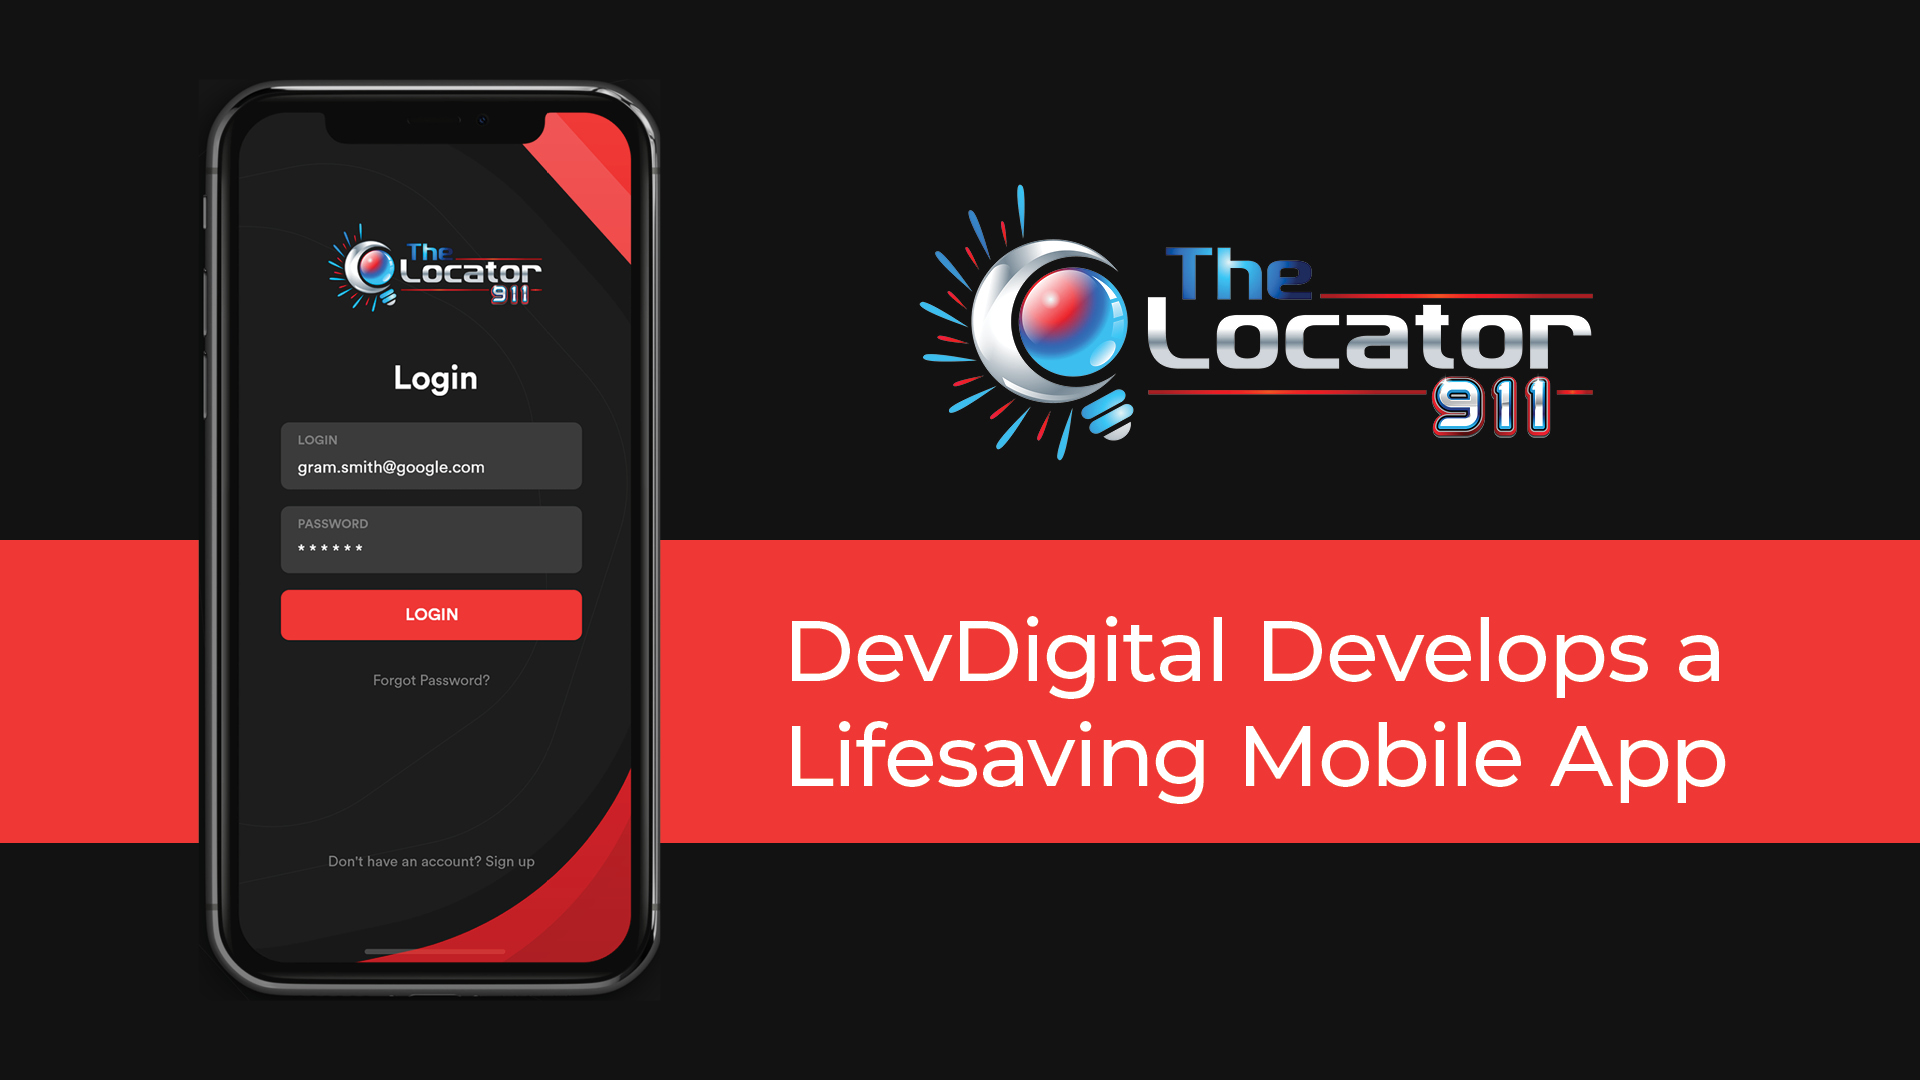 The Locator 911: DevDigital Develops a Lifesaving Mobile App